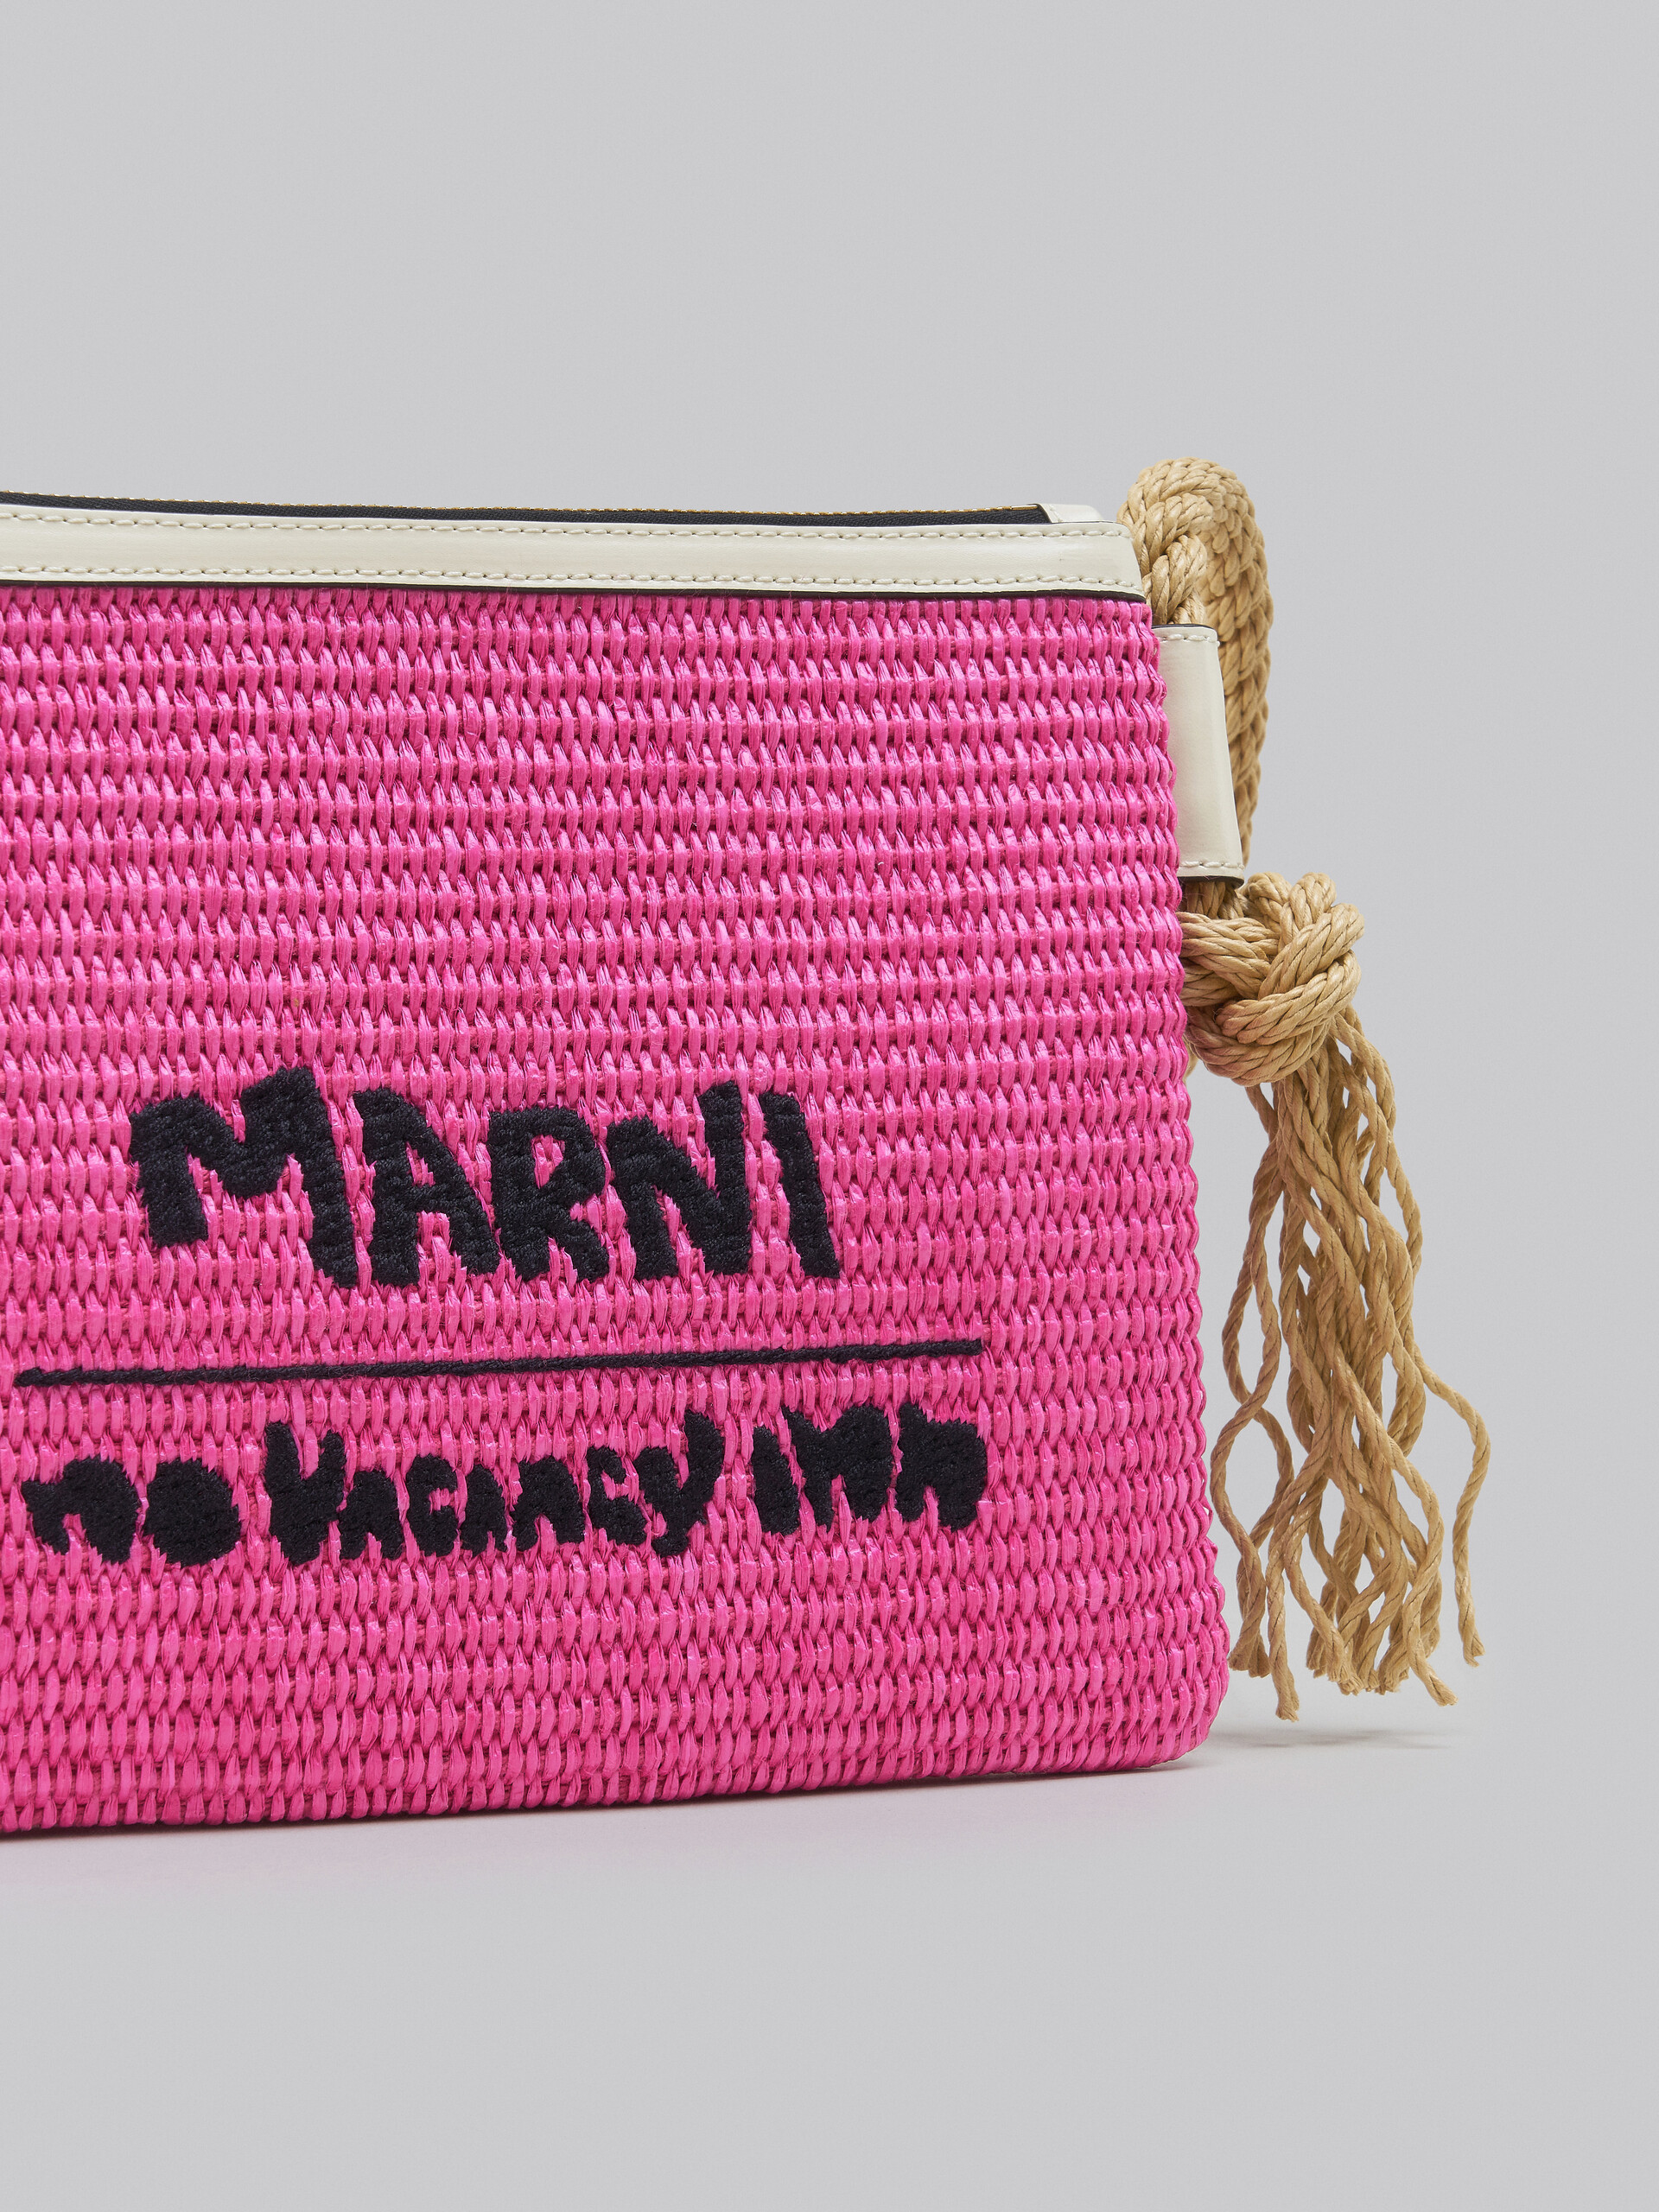 Marni x No Vacancy Inn - Marcel Zip Pouch in pink raffia with white trims - Pochette - Image 5